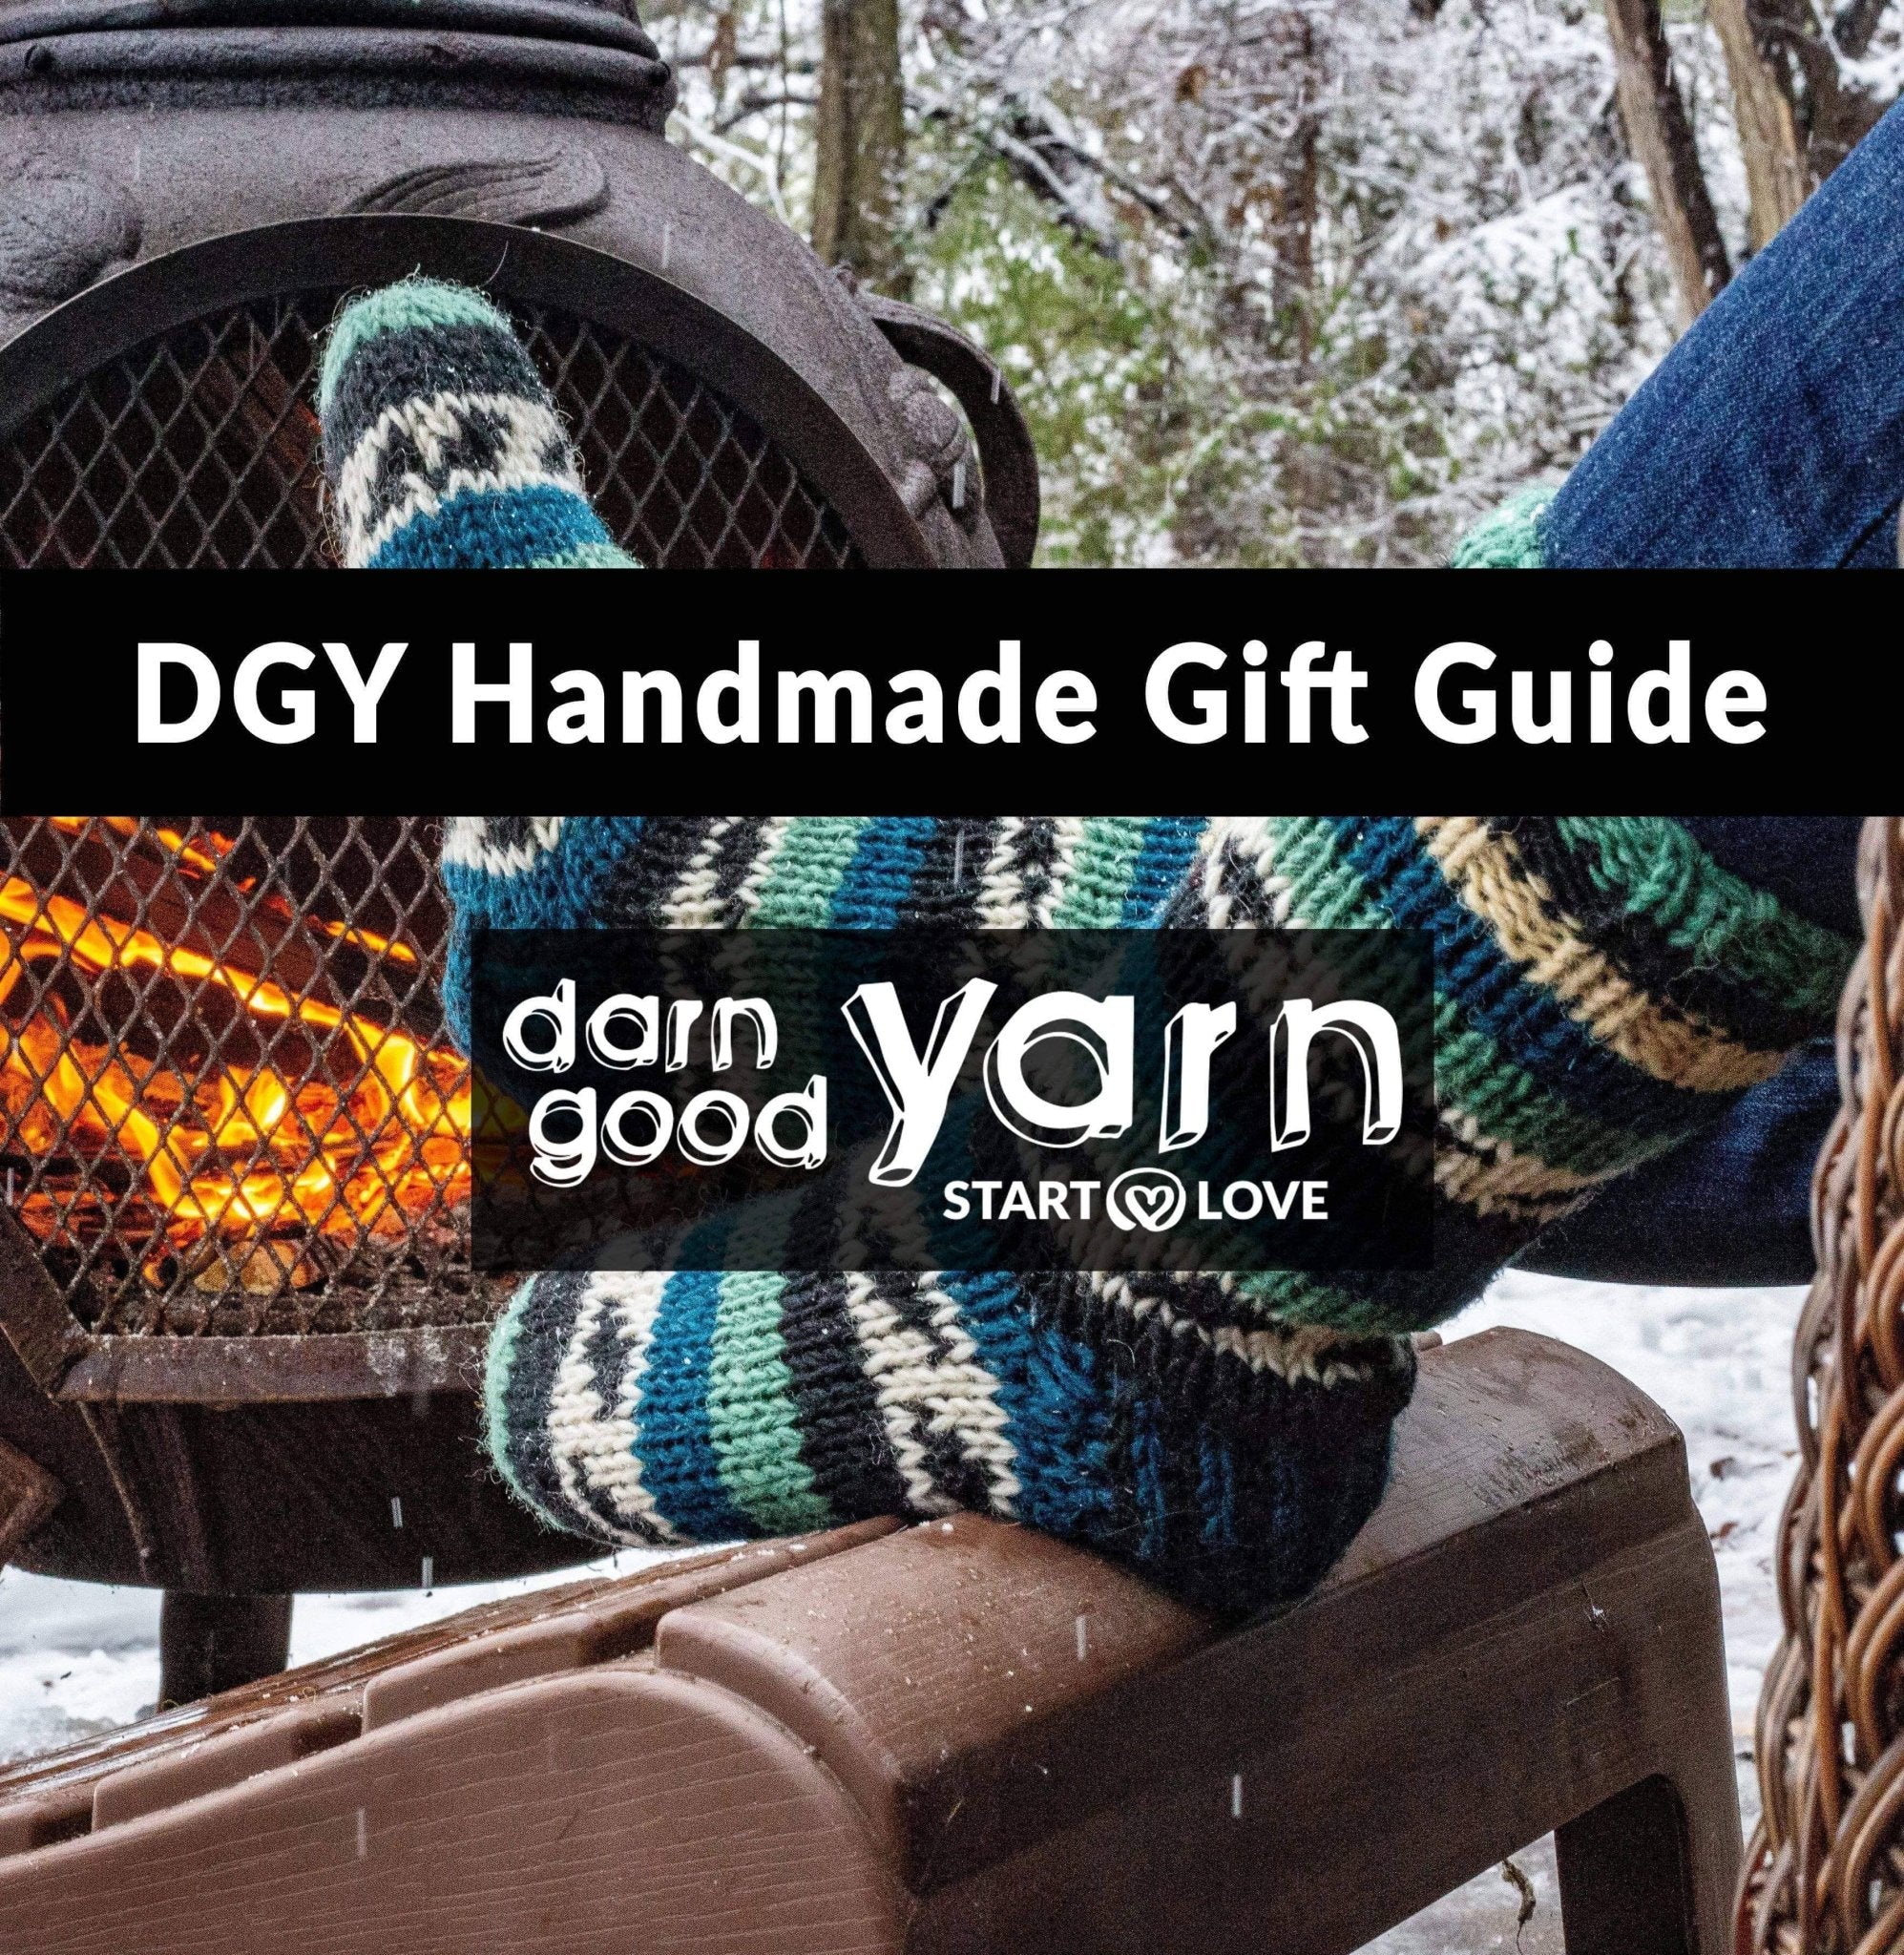 DGY Handmade Gift Guide - Darn Good Yarn